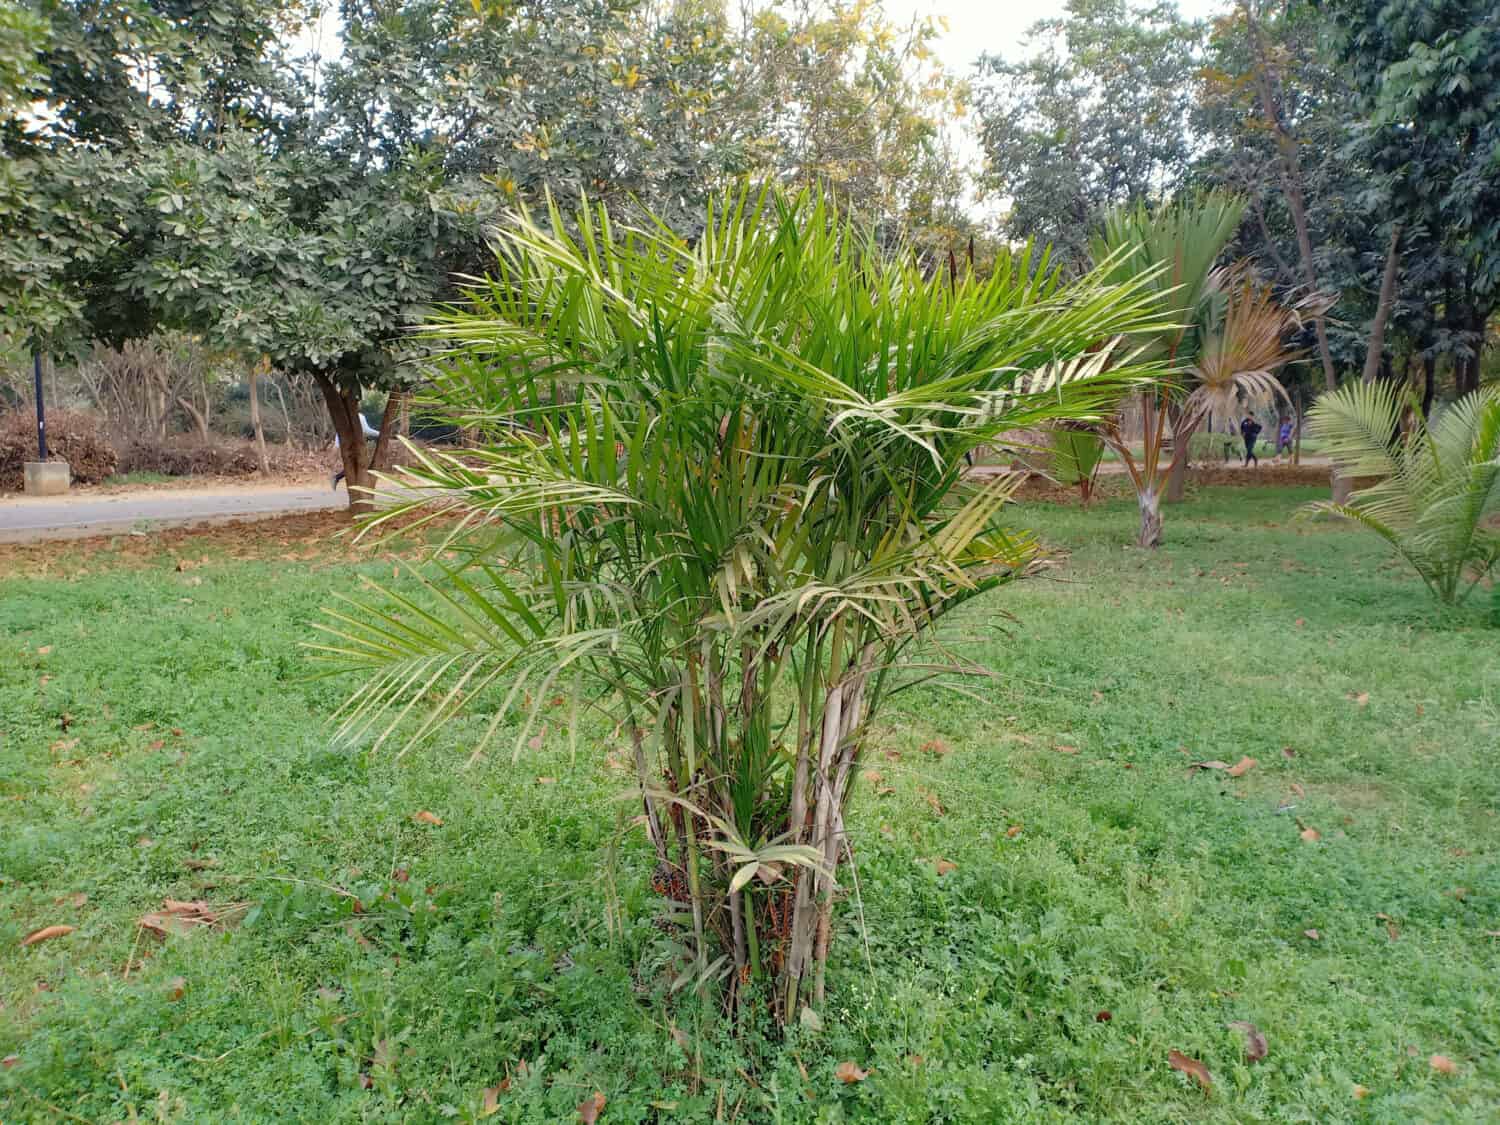 Chamaedorea cataractarum (the cat palm, cascade palm, or cataract palm) tree in the park